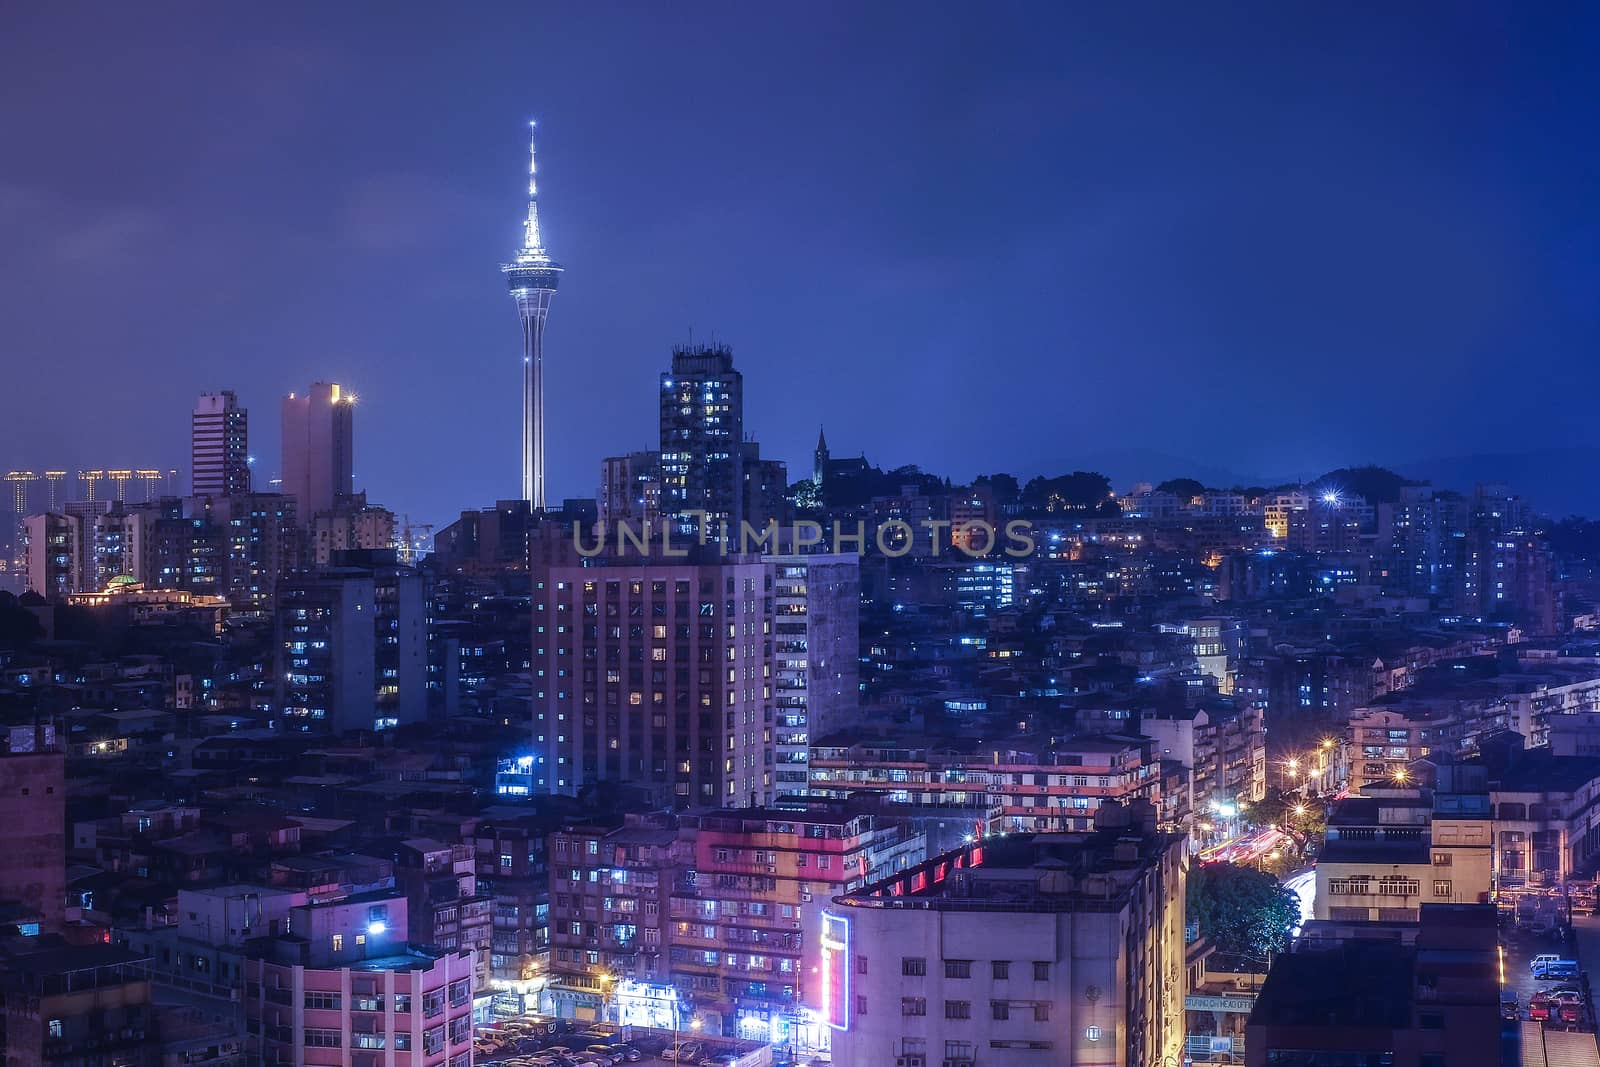 
Night view of Macau Tower in Twilight Time by Surasak